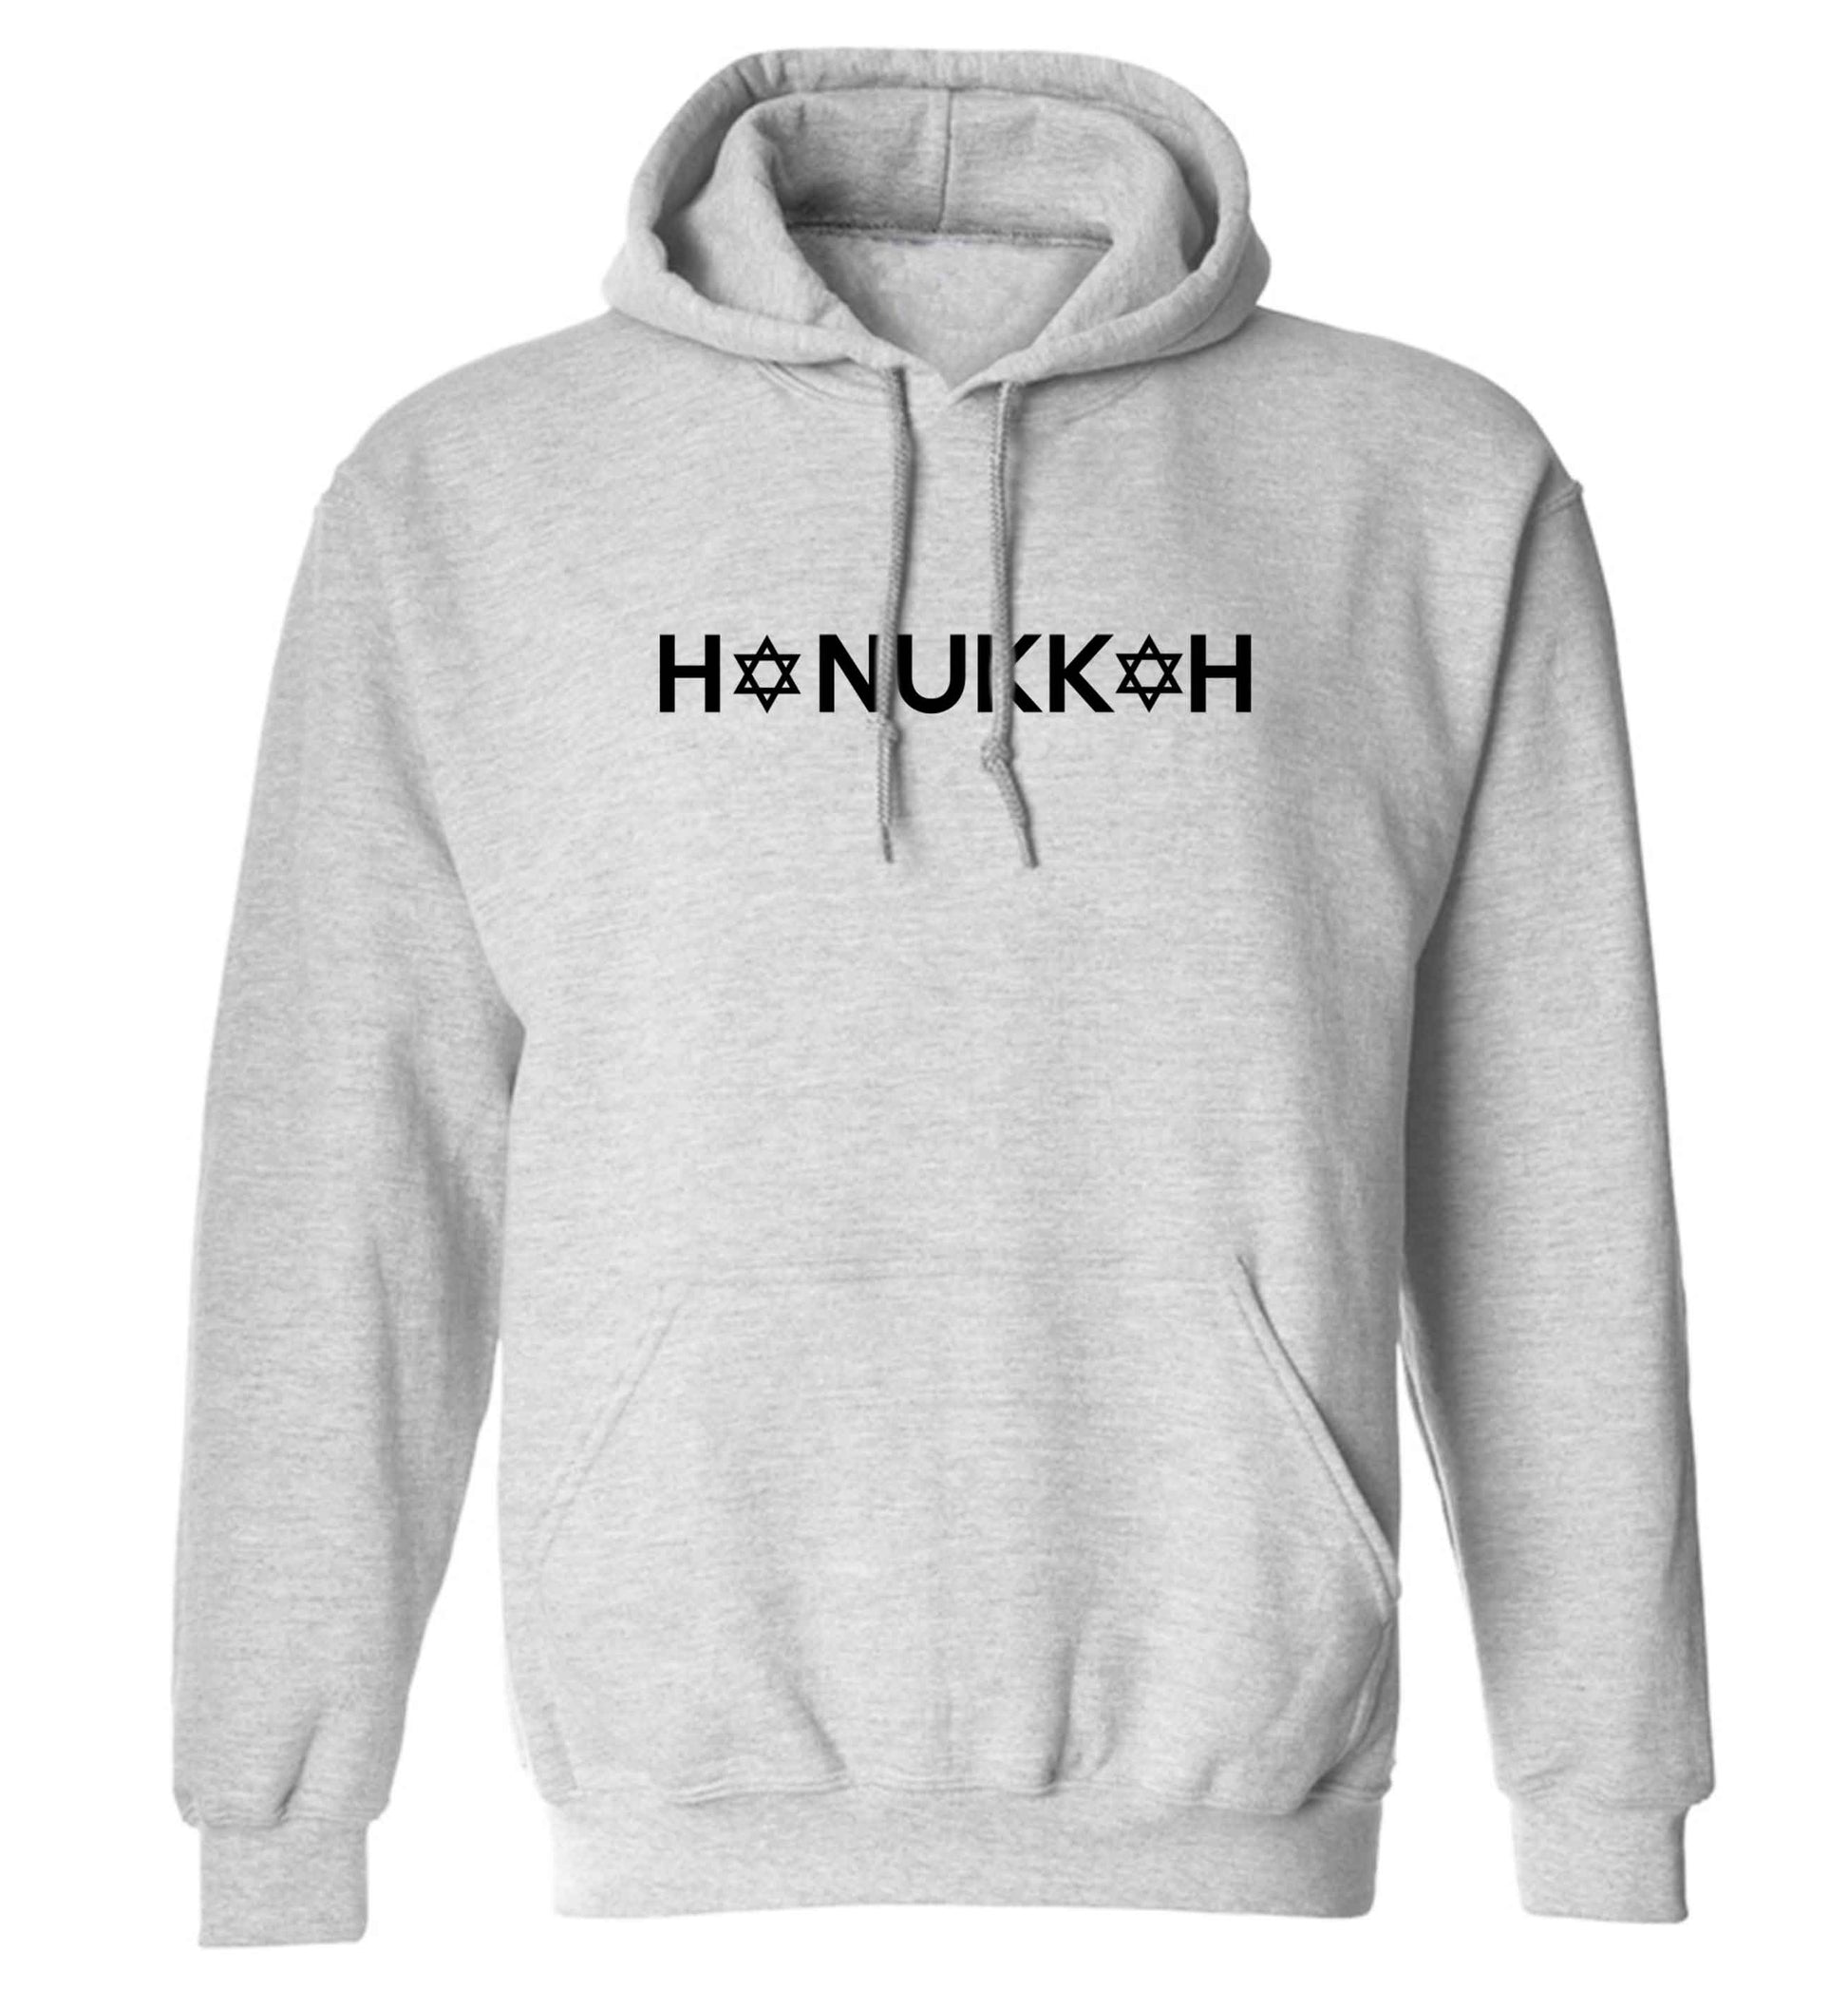 Hanukkah star of david adults unisex grey hoodie 2XL